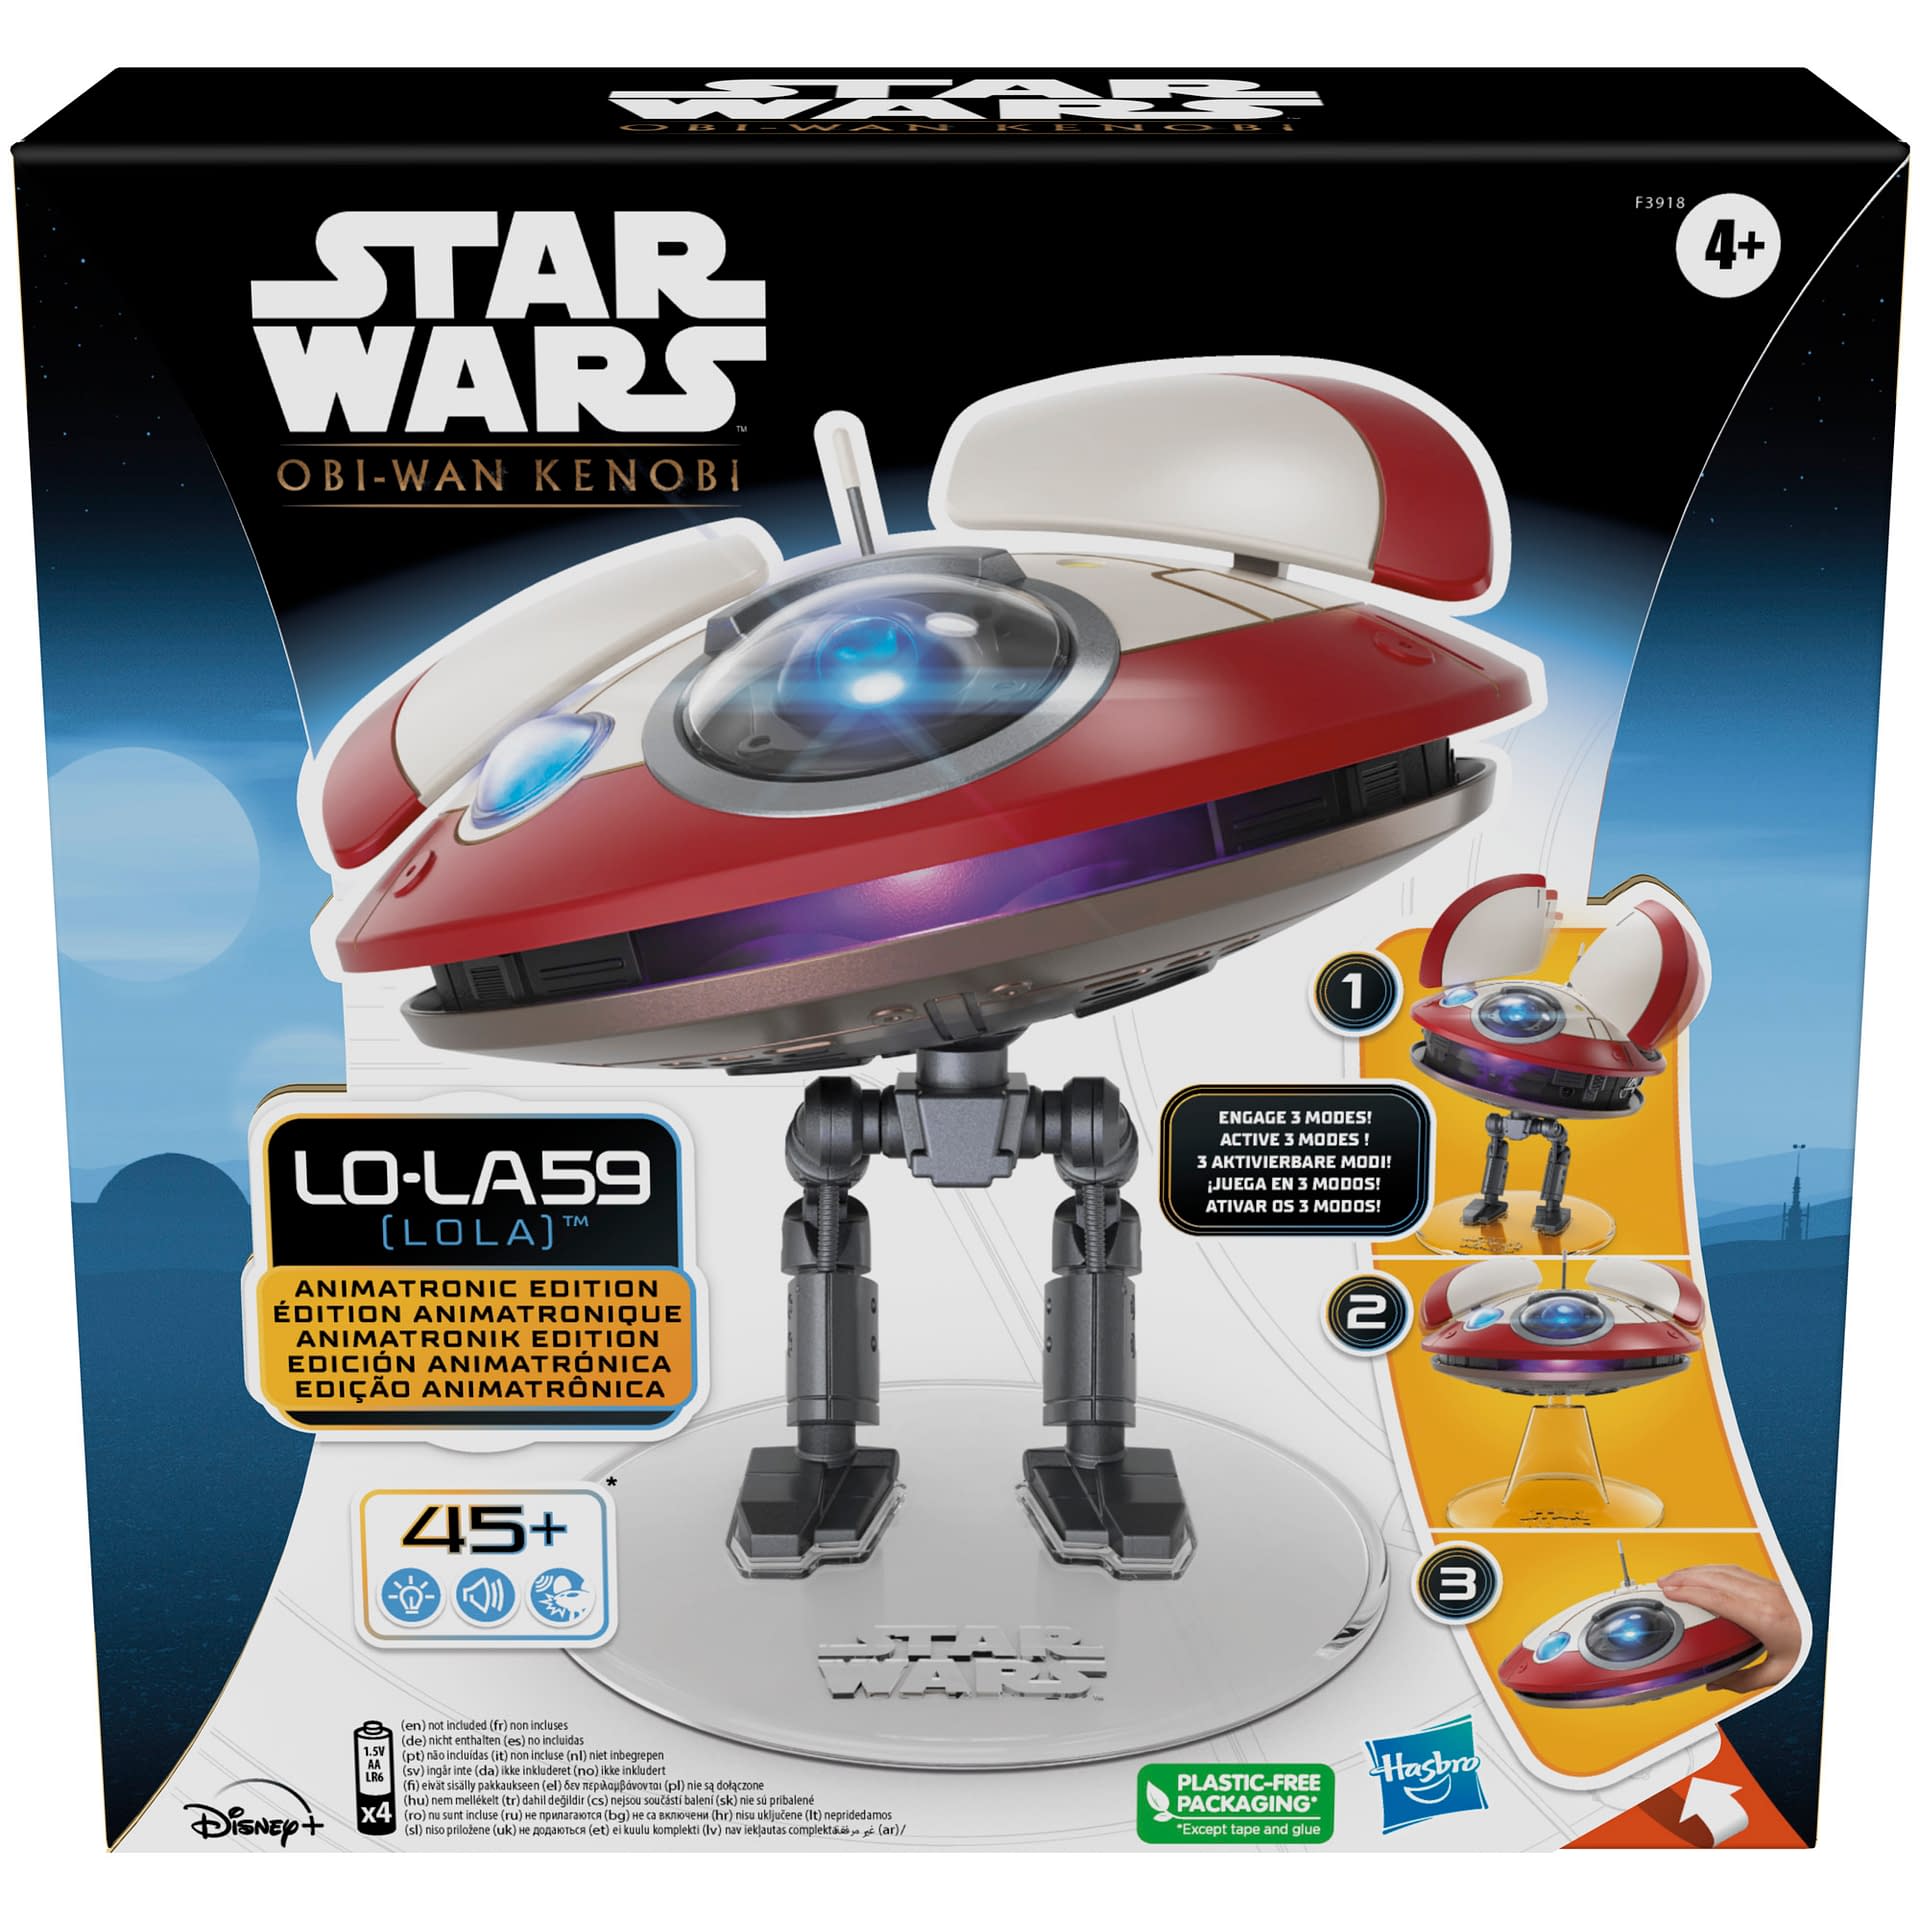 Star Wars Newest Droid L0-LA59 aka LOLA Comes to Hasbro 